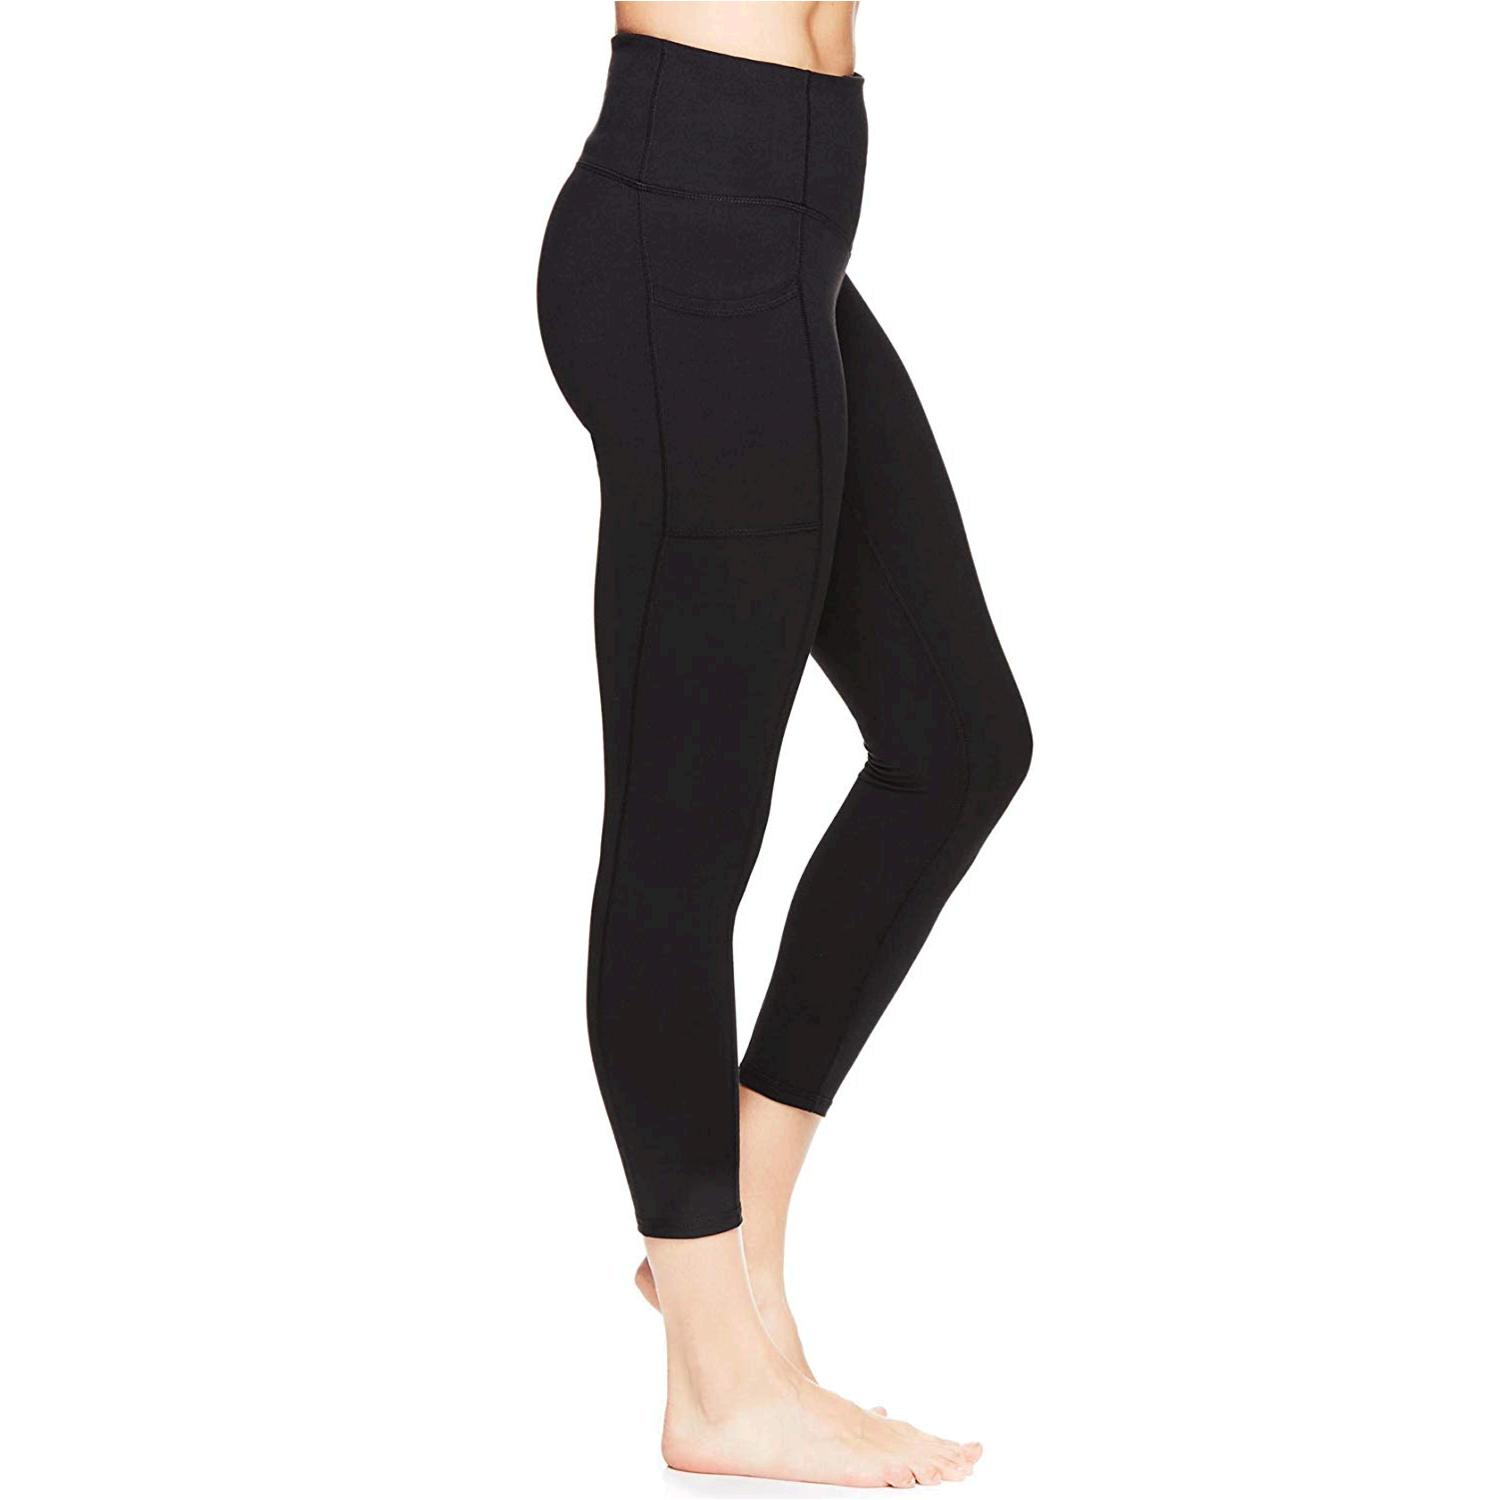 Gaiam Women's Capri Yoga Pants - Performance Spandex, Black, Size Small ...